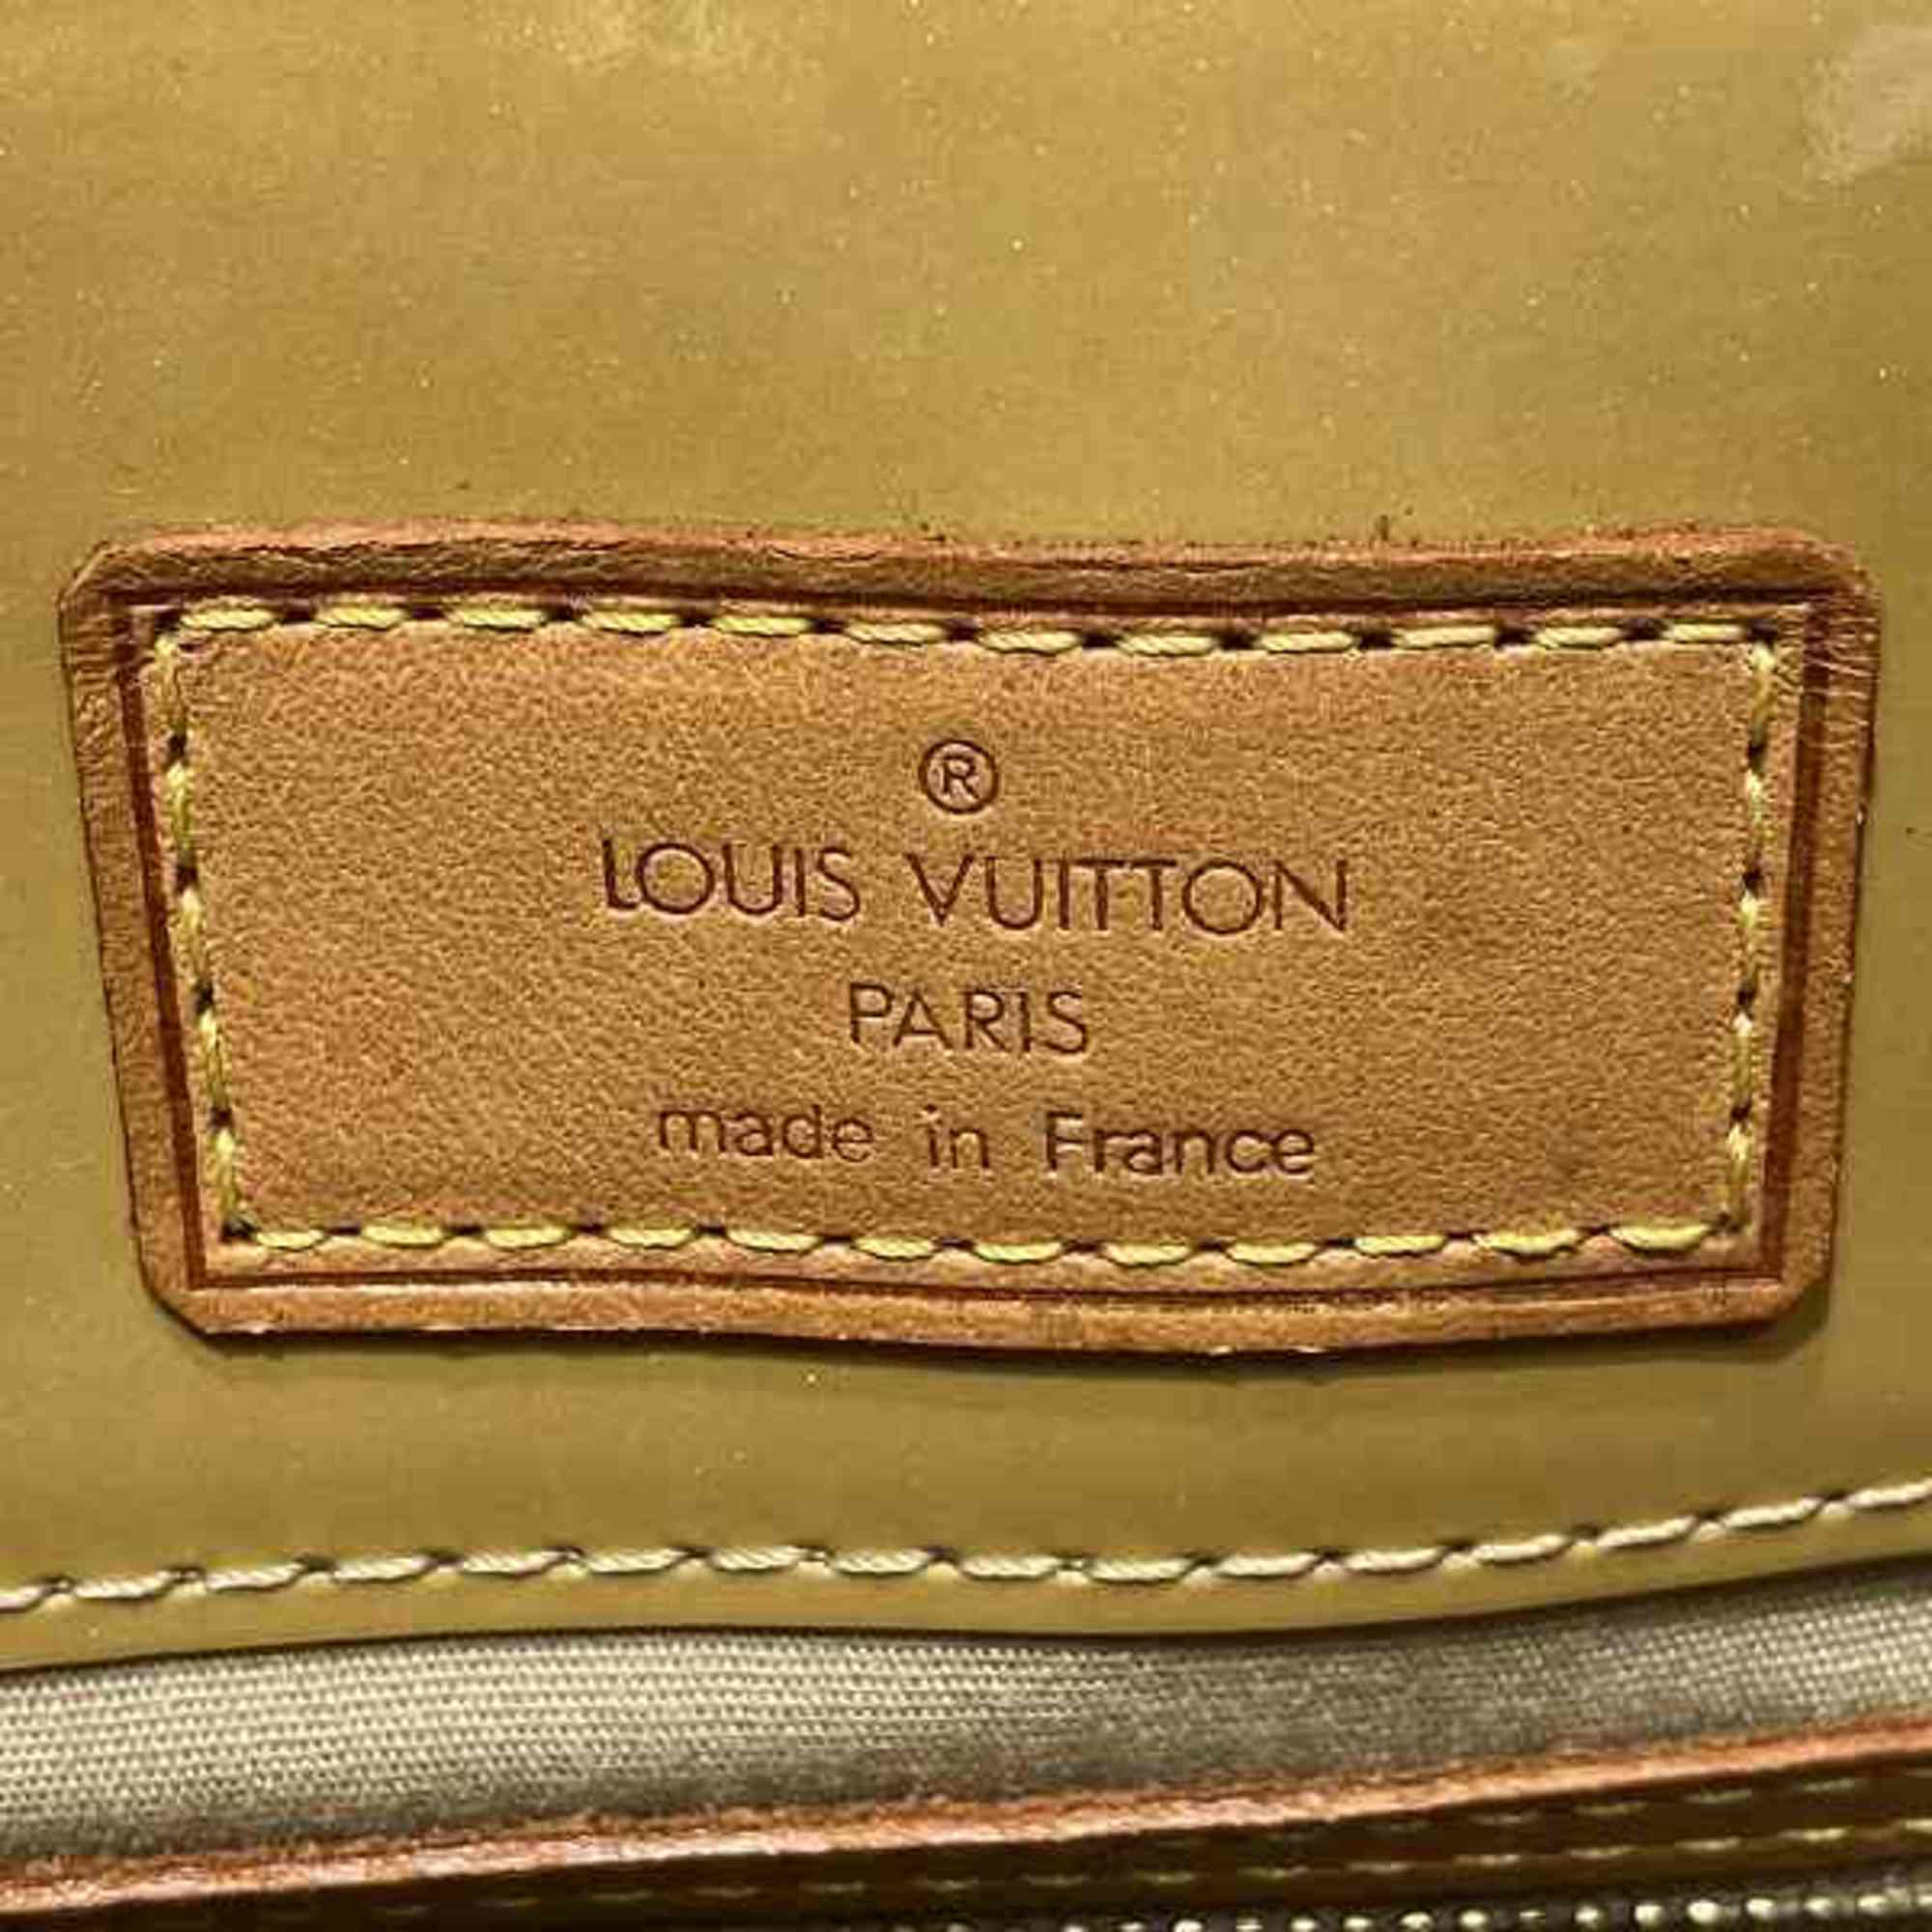 Louis Vuitton Monogram Vernis Lead PM M91144 Bag Handbag Tote Ladies